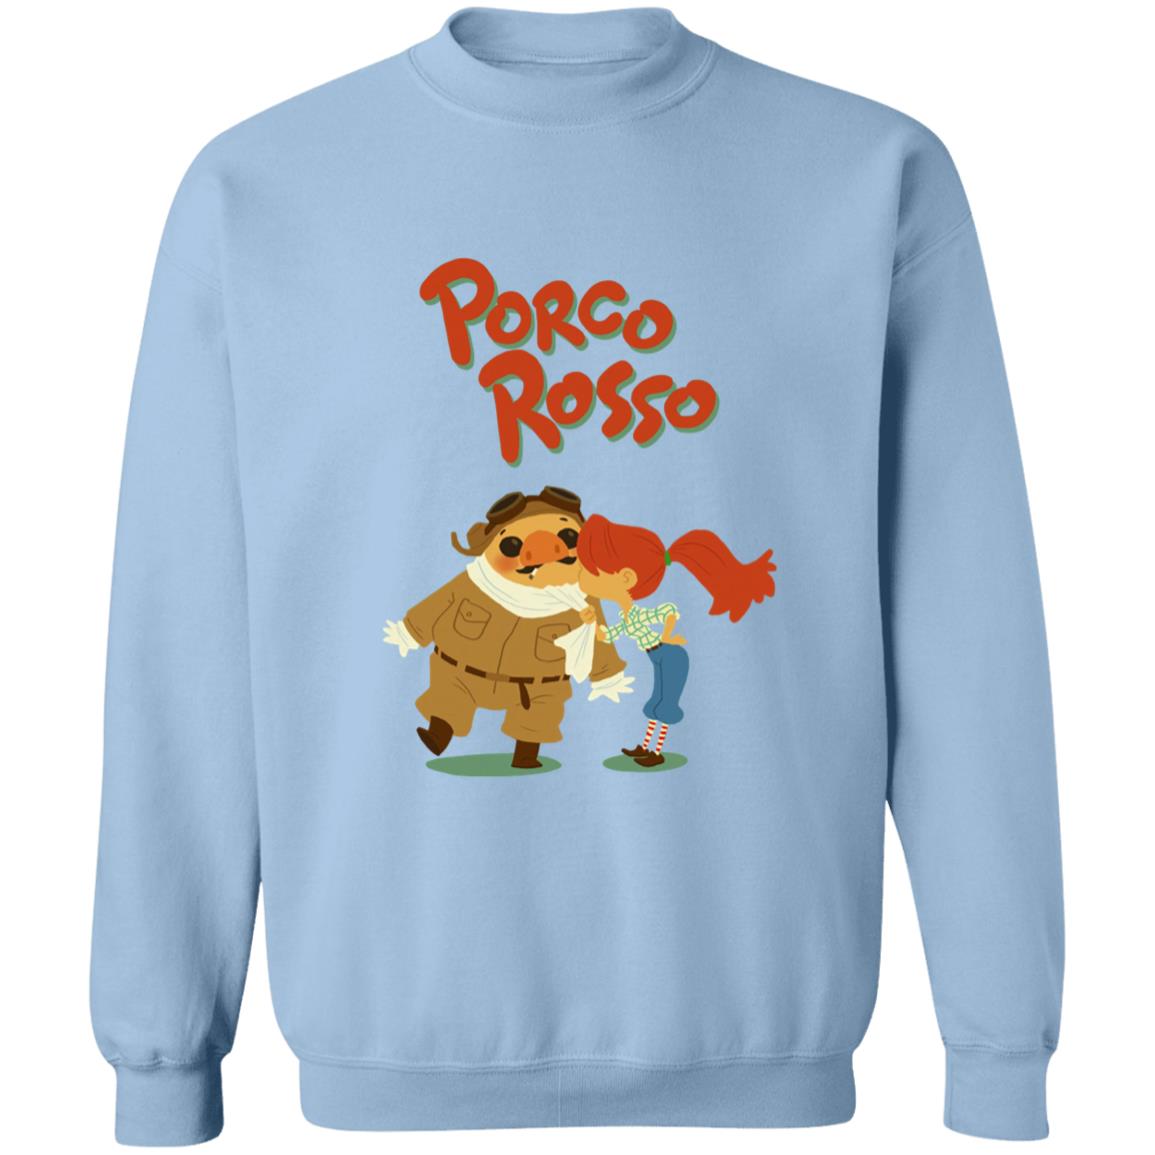 Porco Rosso – The Kiss Sweatshirt